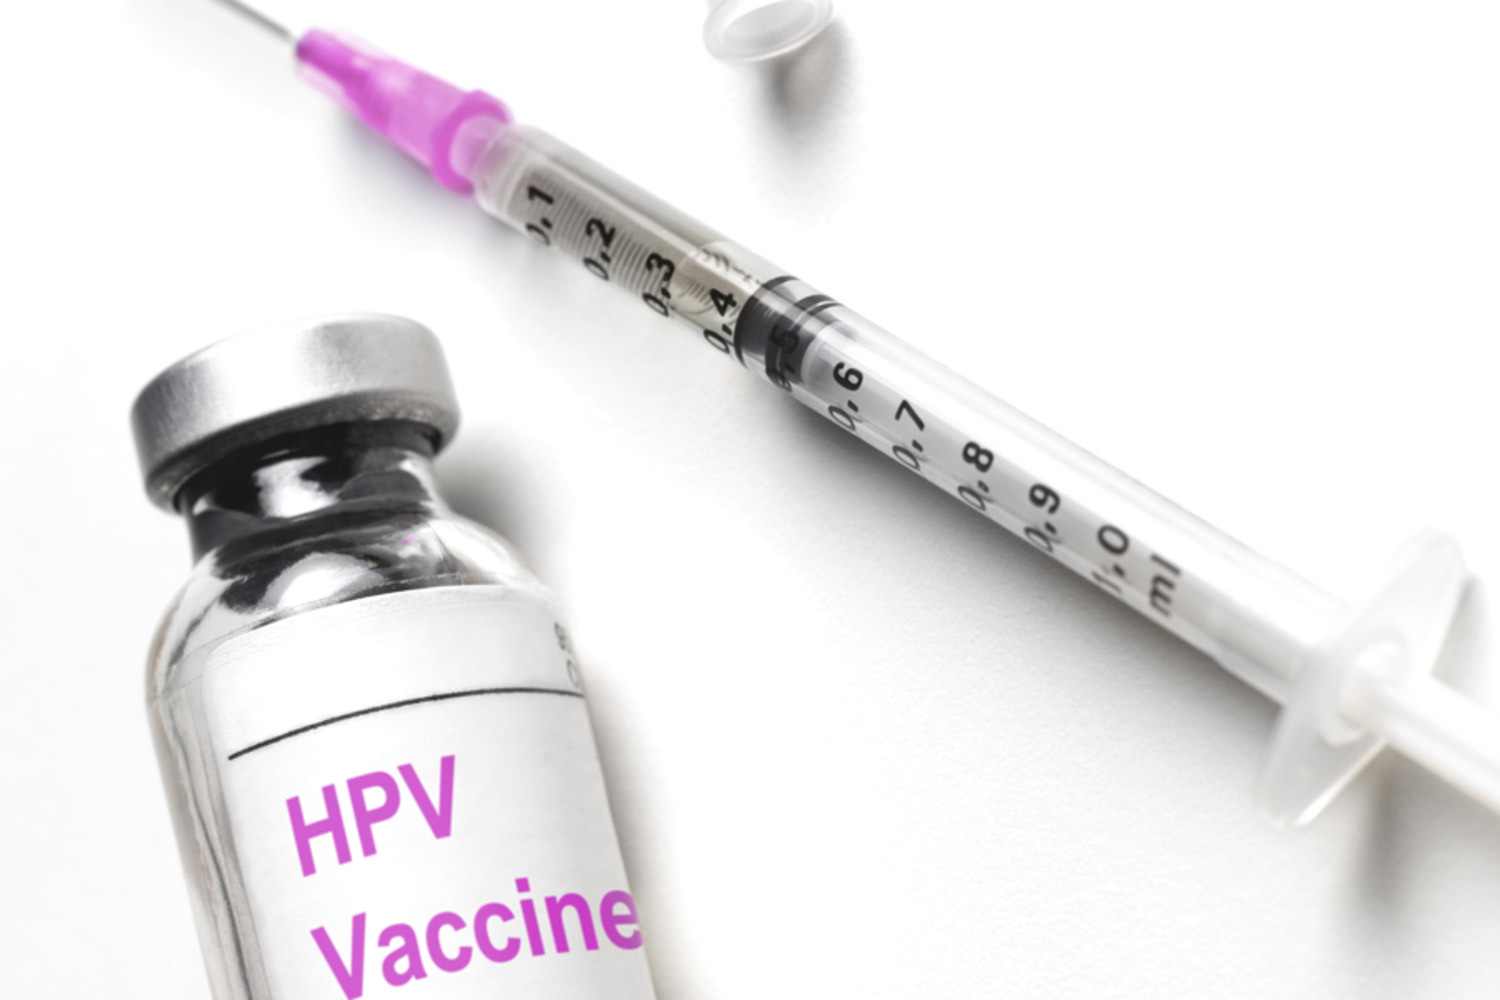 Hpv vaccine brands